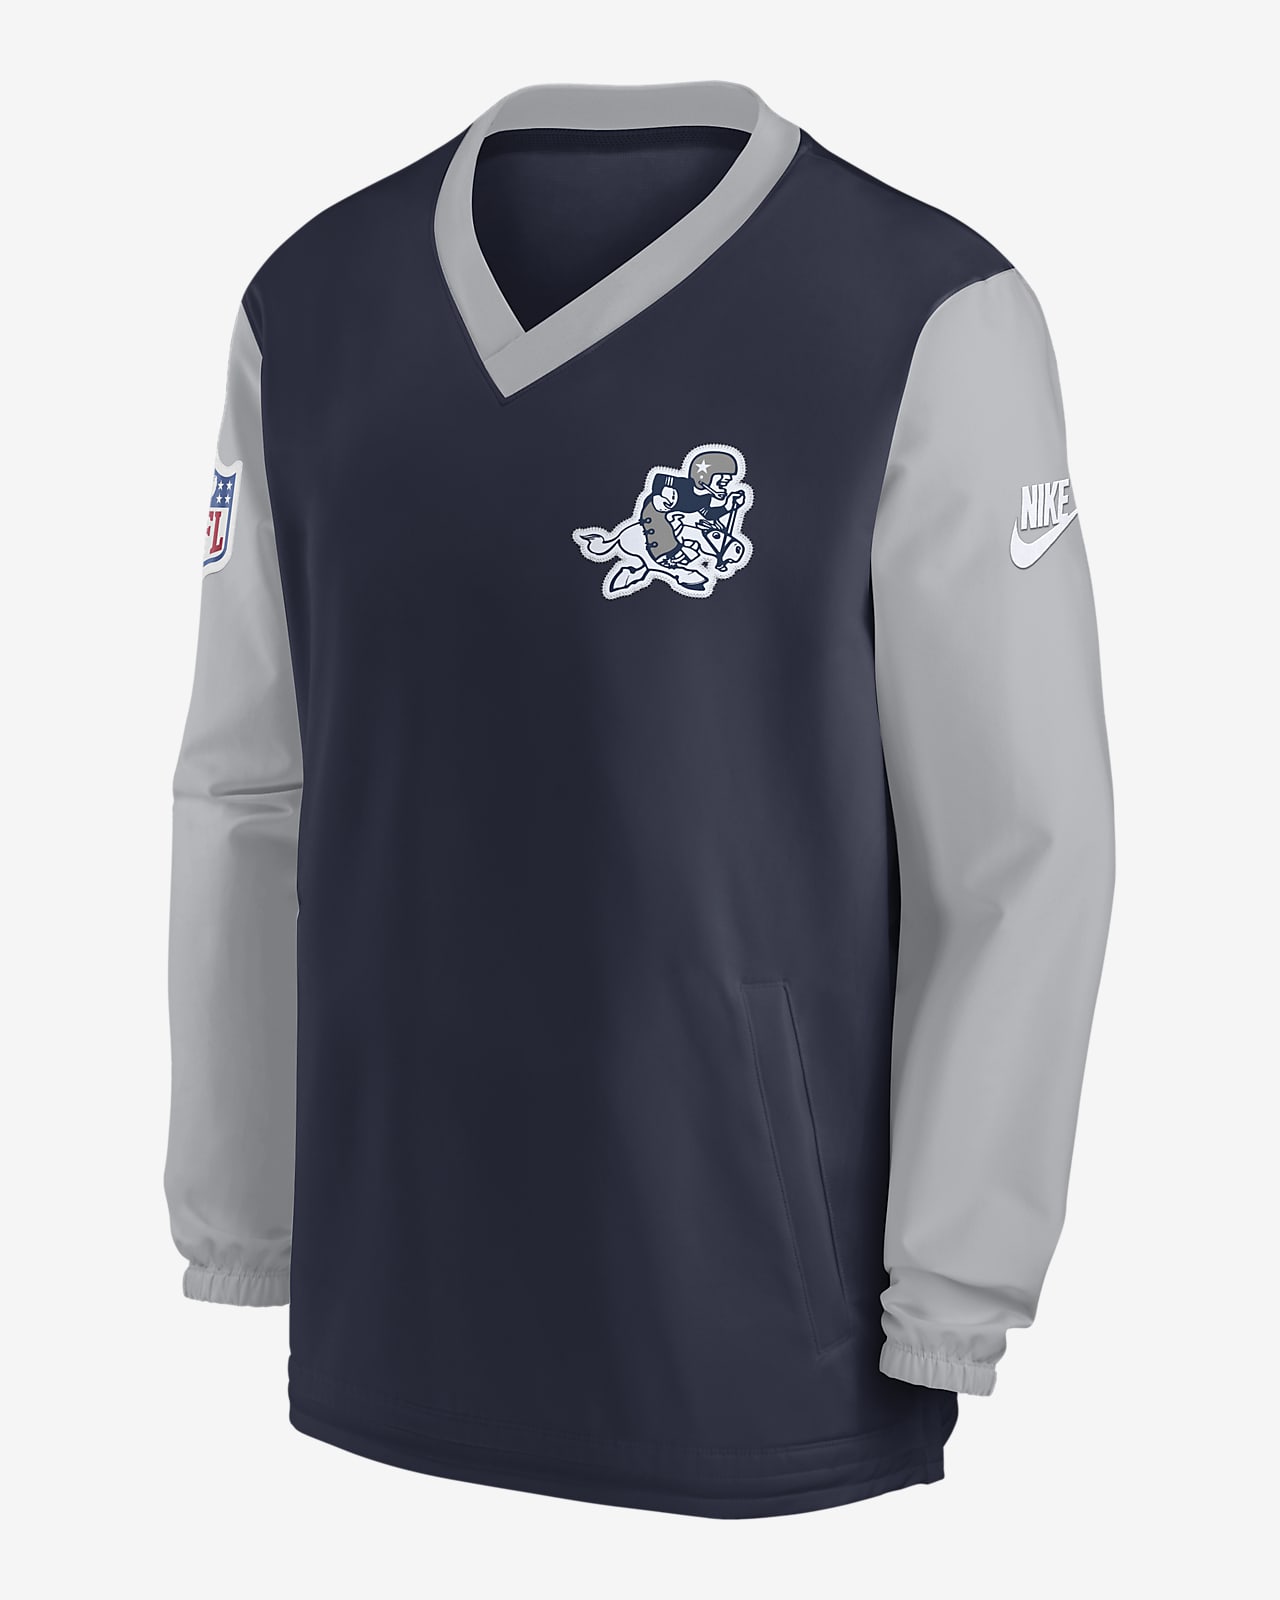 Dallas Cowboys Team Men's Nike NFL Long-Sleeve Windshirt